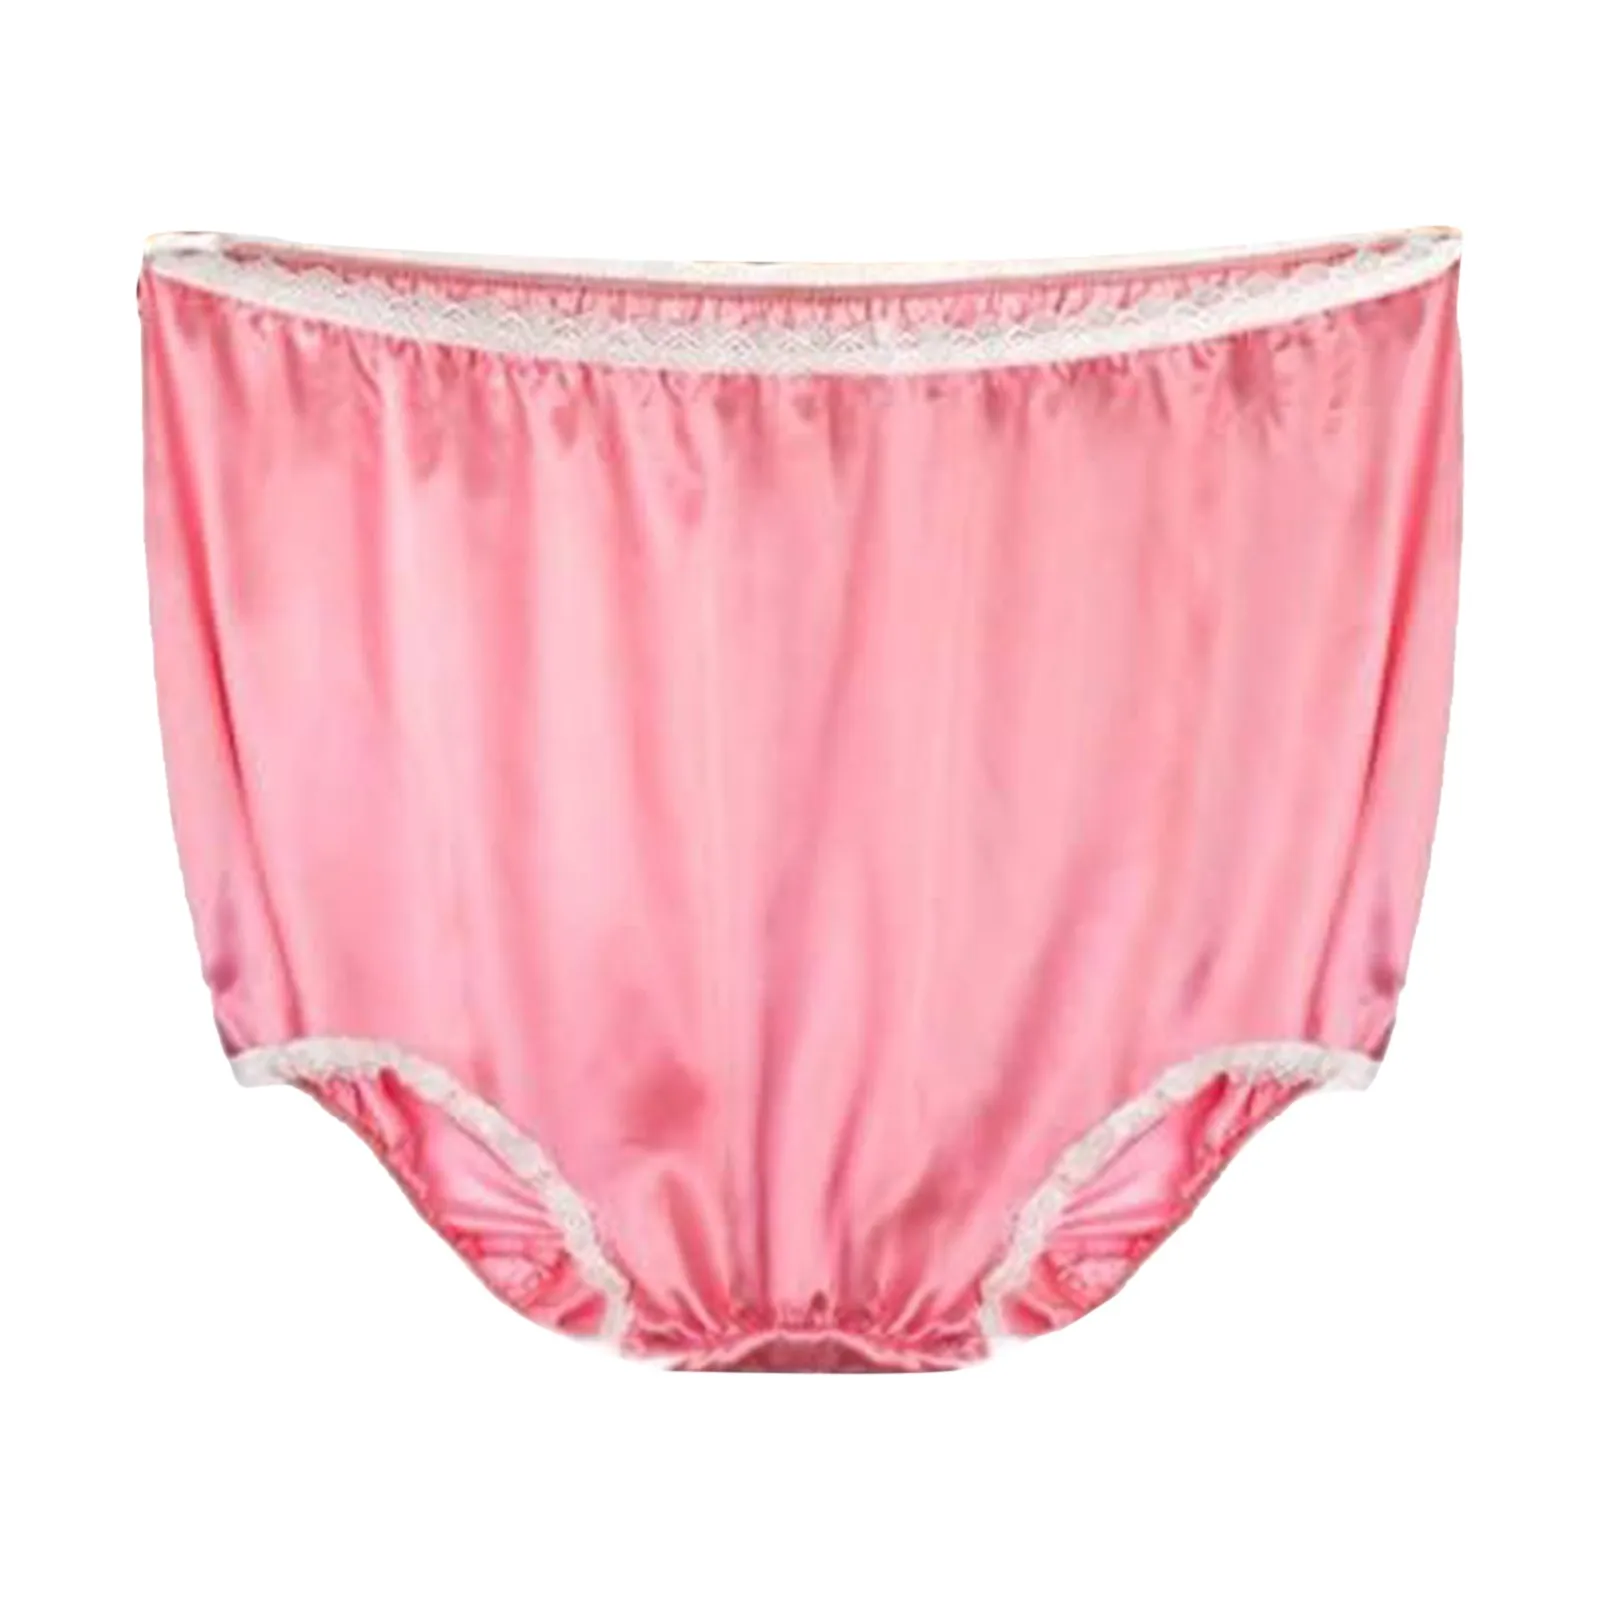 https://ae01.alicdn.com/kf/Sd1d3841af82d4b6d8b617c8f44dbf816I/Valentine-s-Day-Funny-Joke-Gift-Underwear-For-Women-And-Men-Big-Momma-Panties-Oversized-Funny.jpg